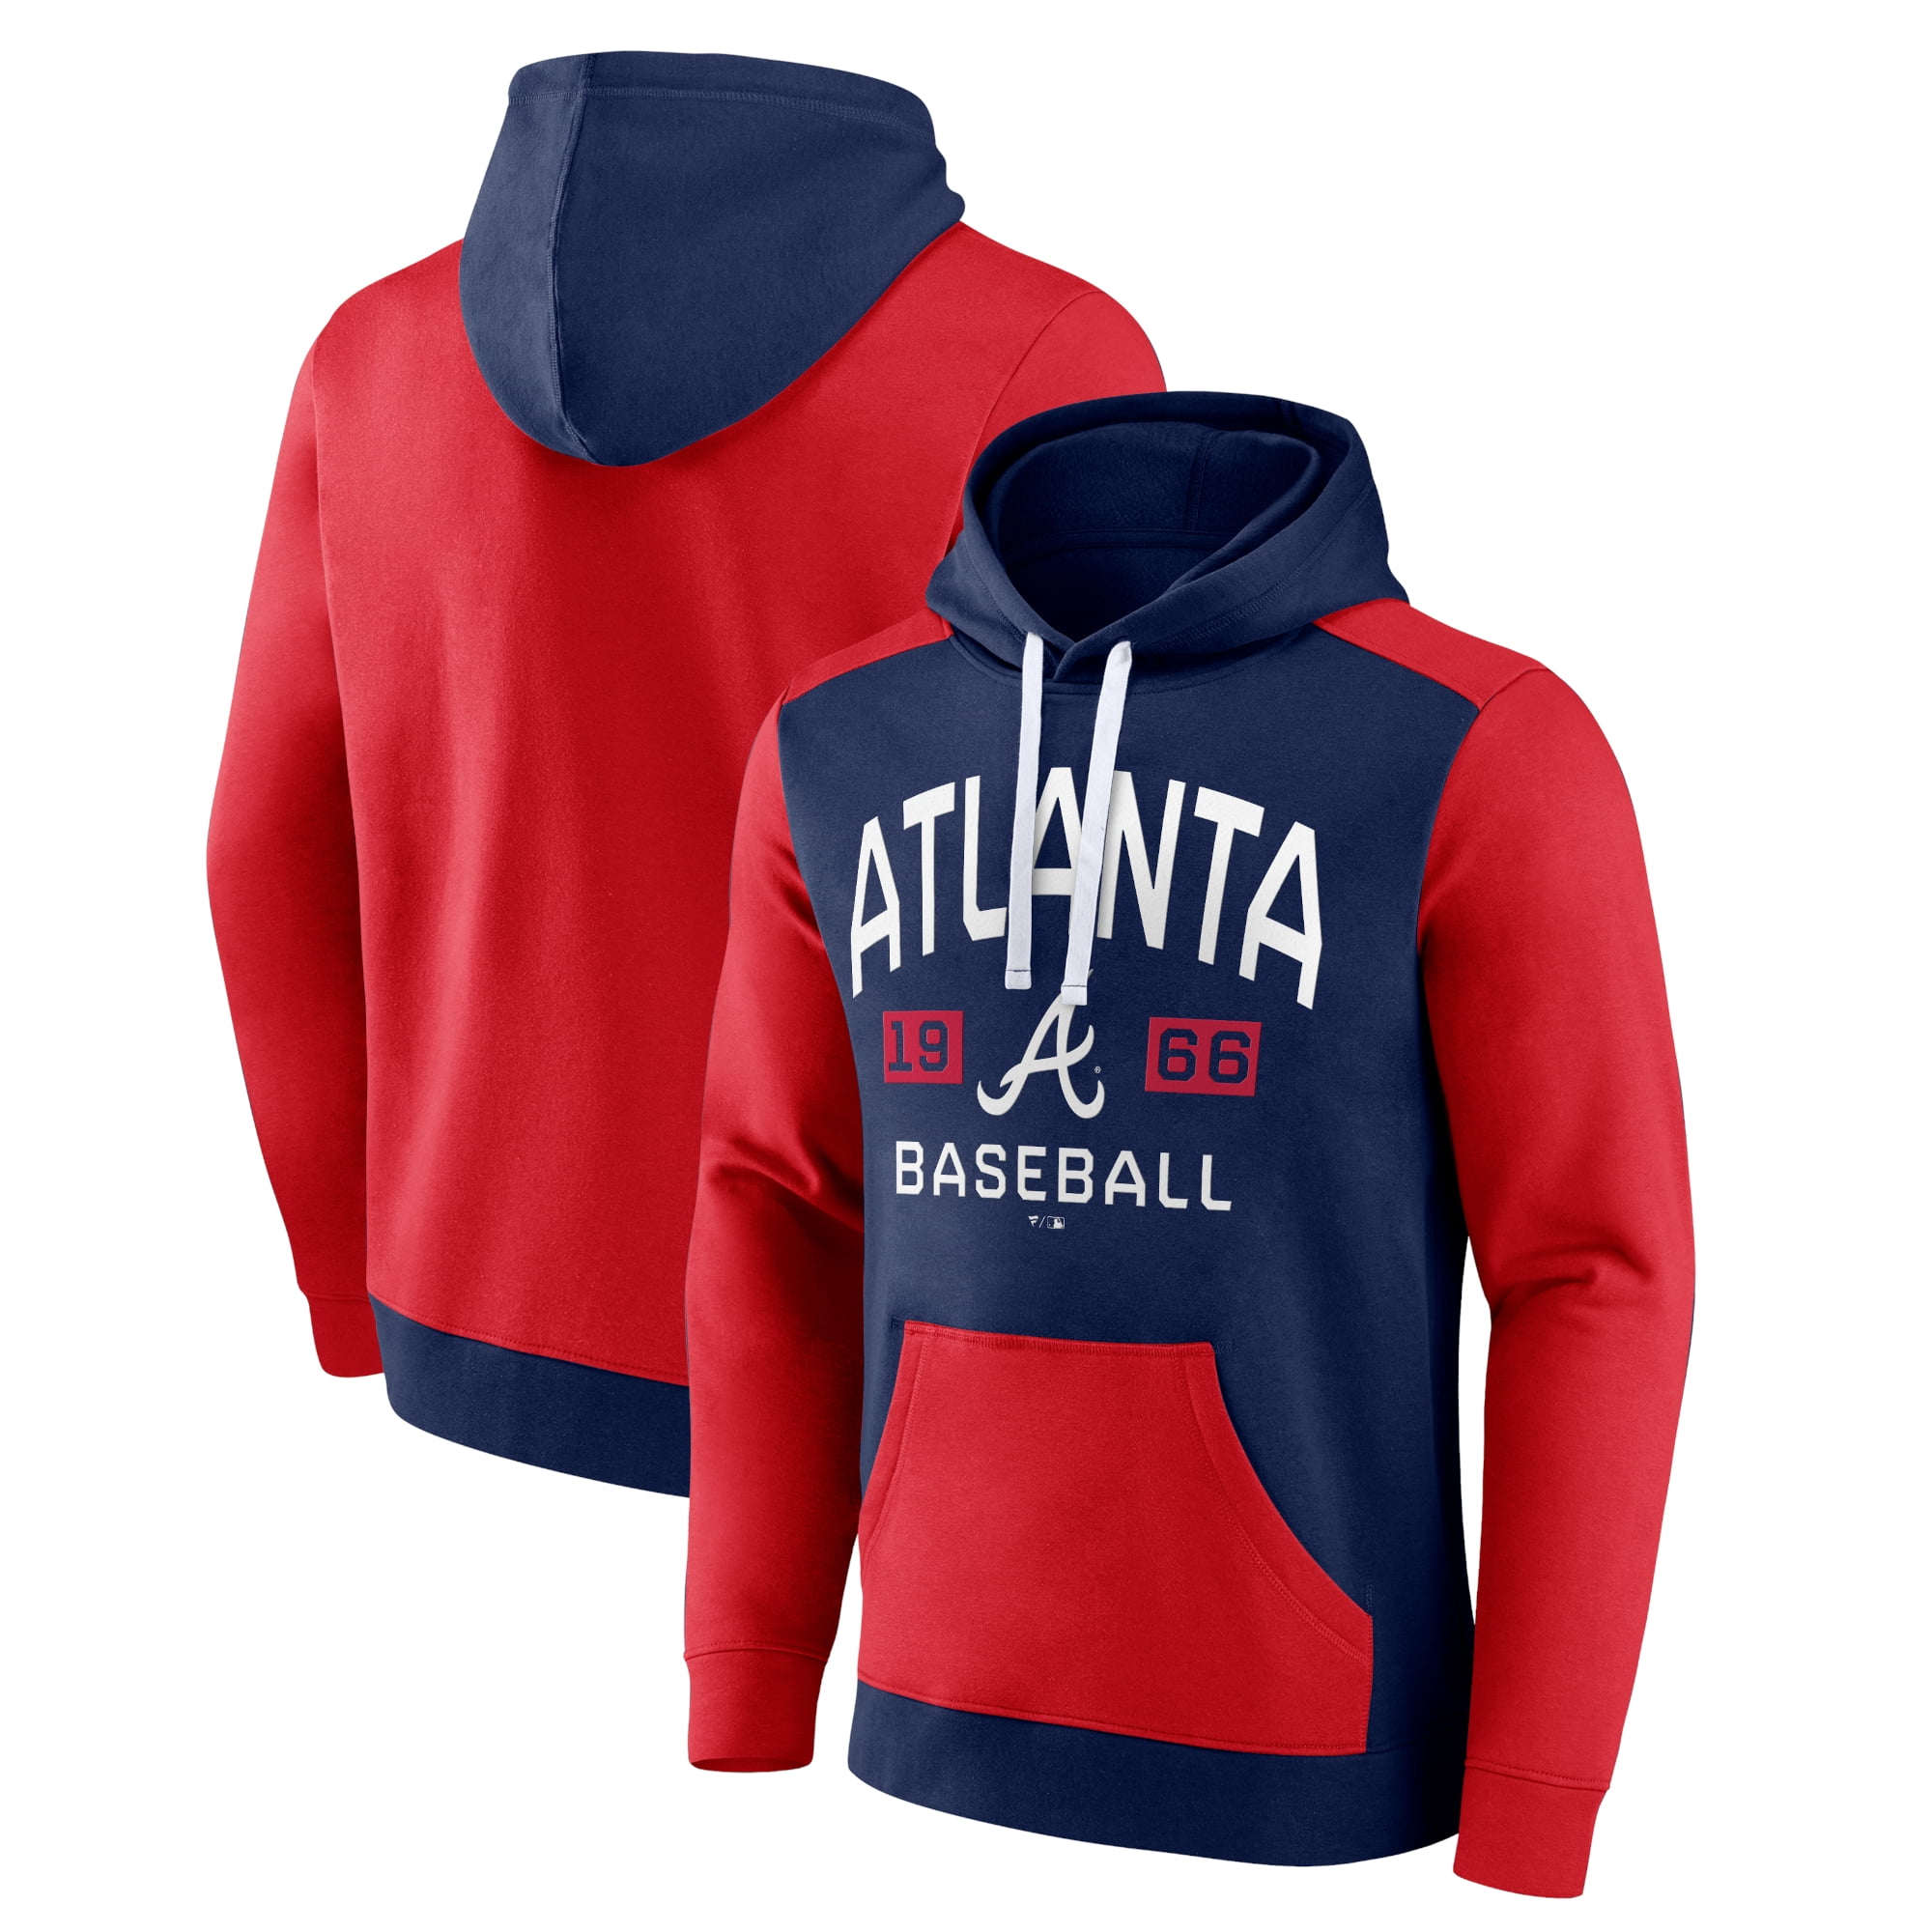 Men's Fanatics Branded Navy/Red Atlanta Braves Chip In Pullover Hoodie 